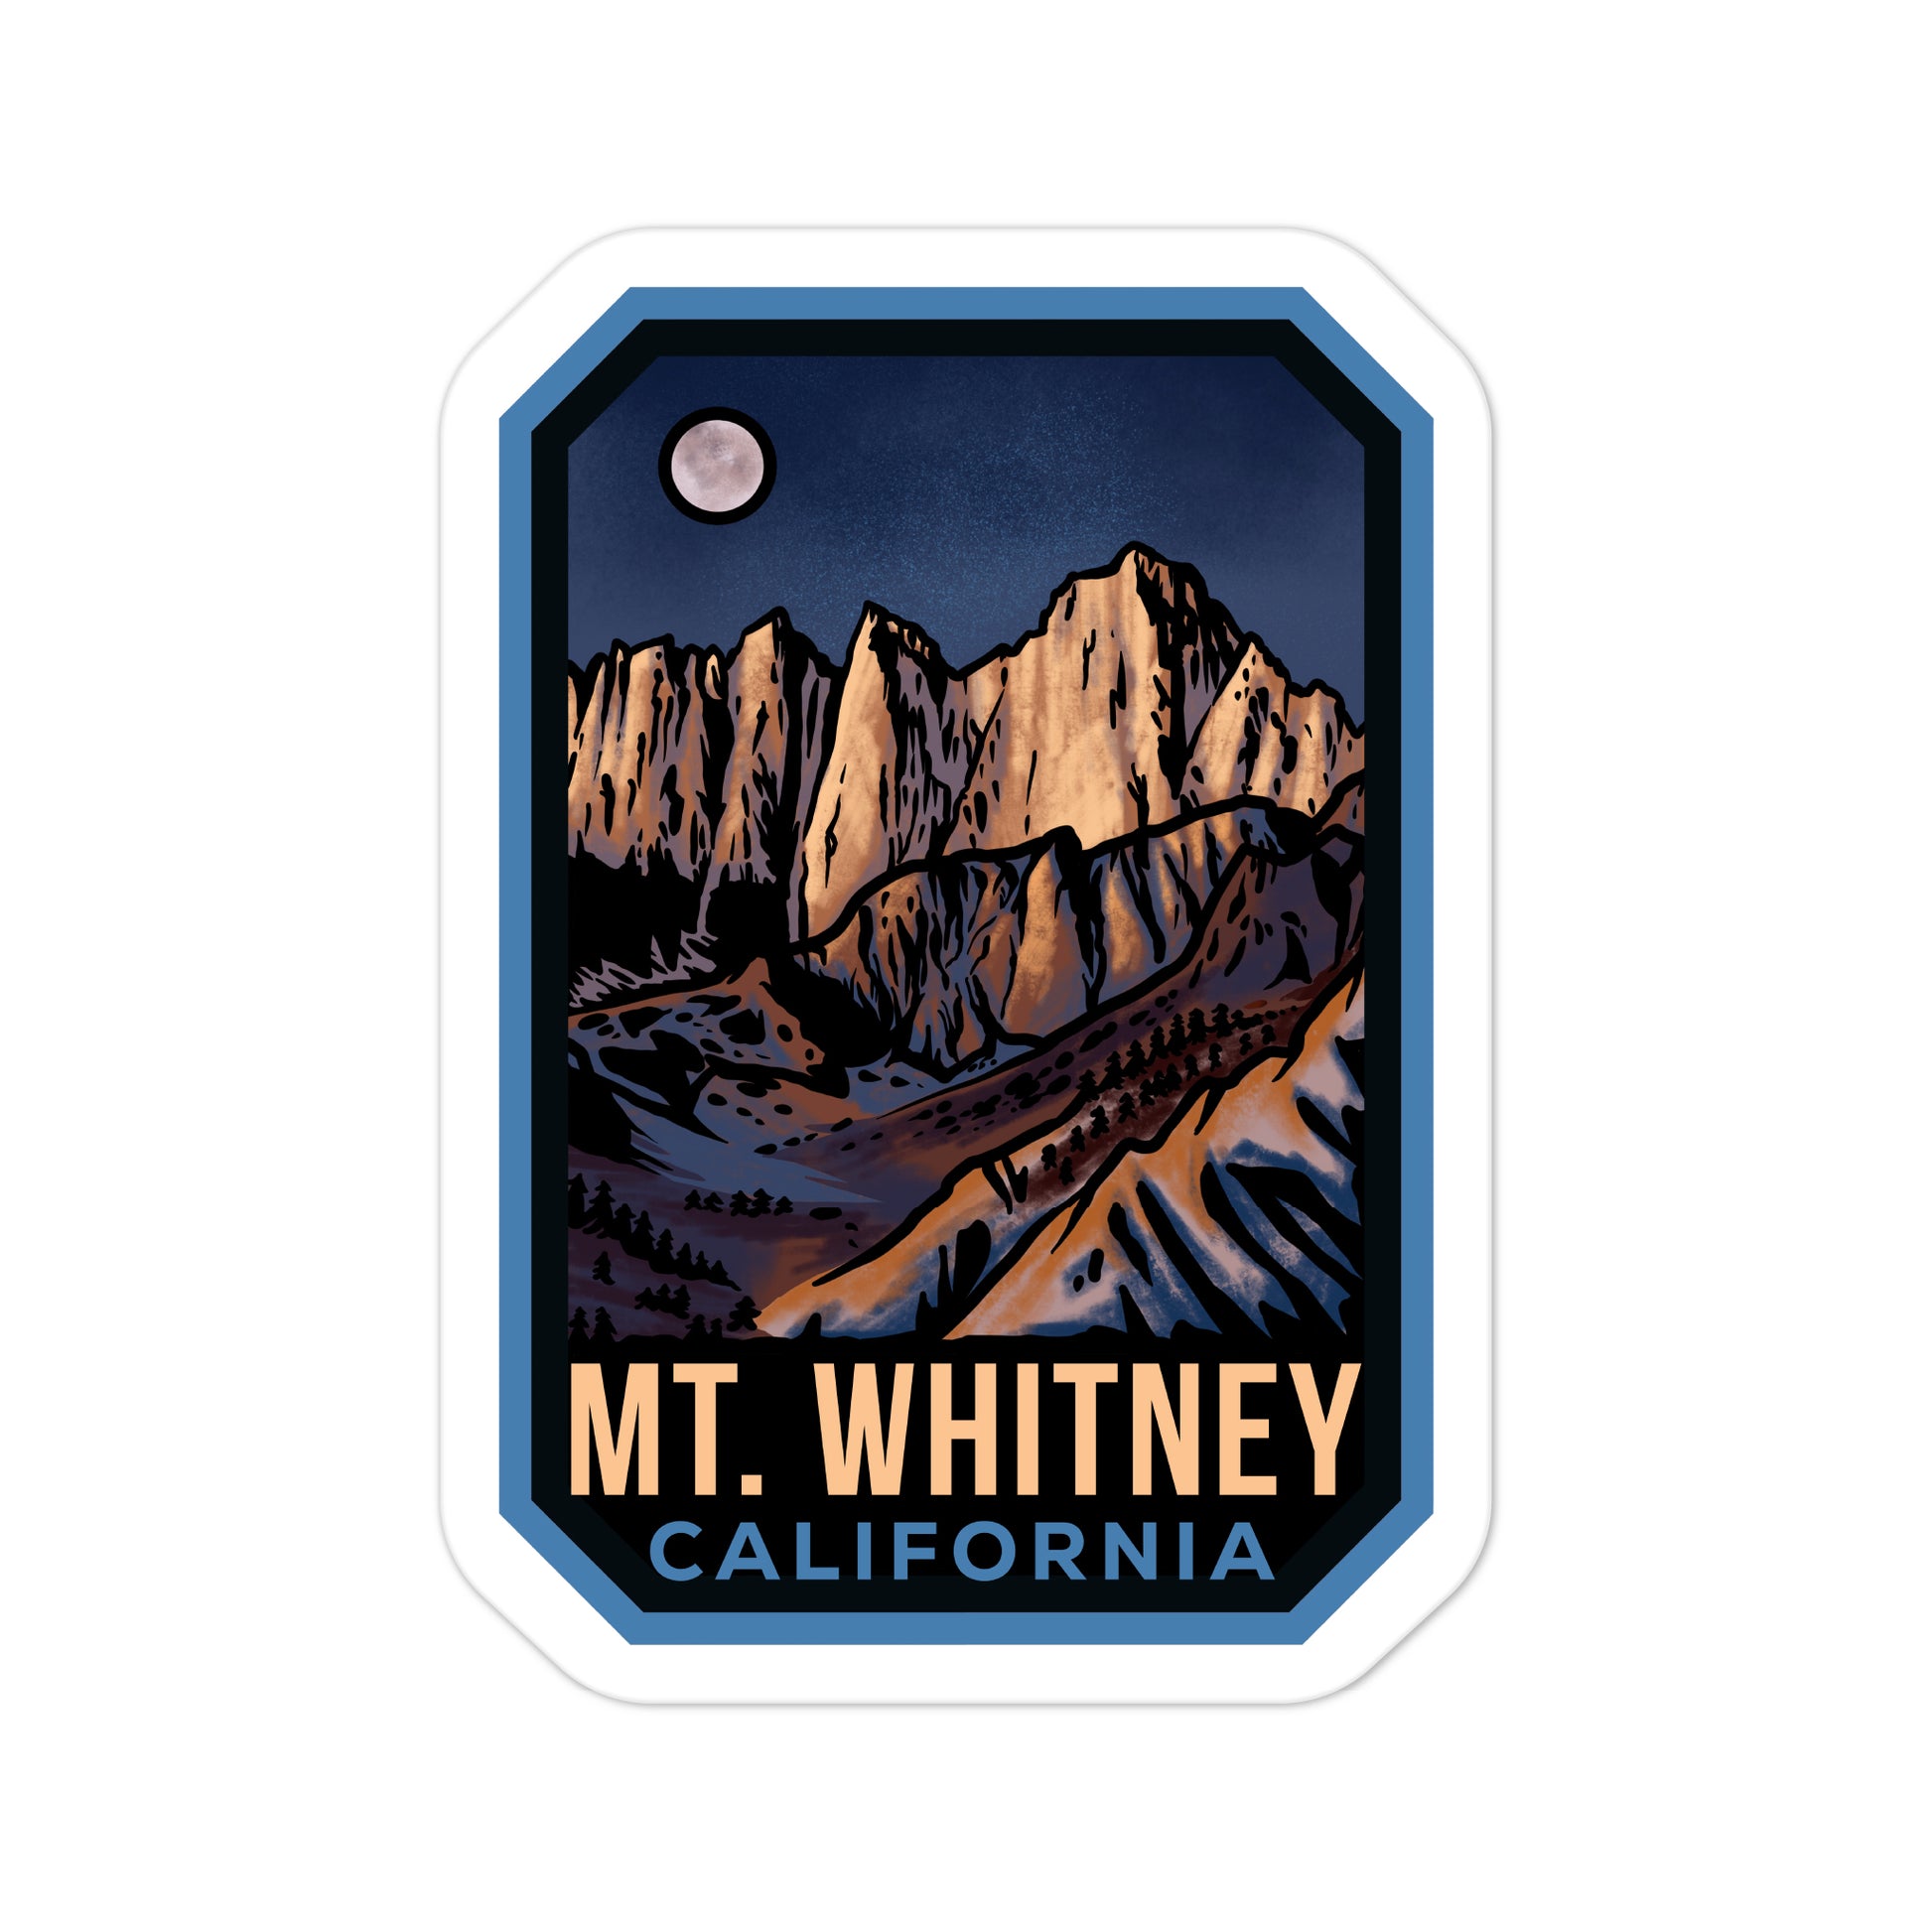 A sticker of Mount Whitney California